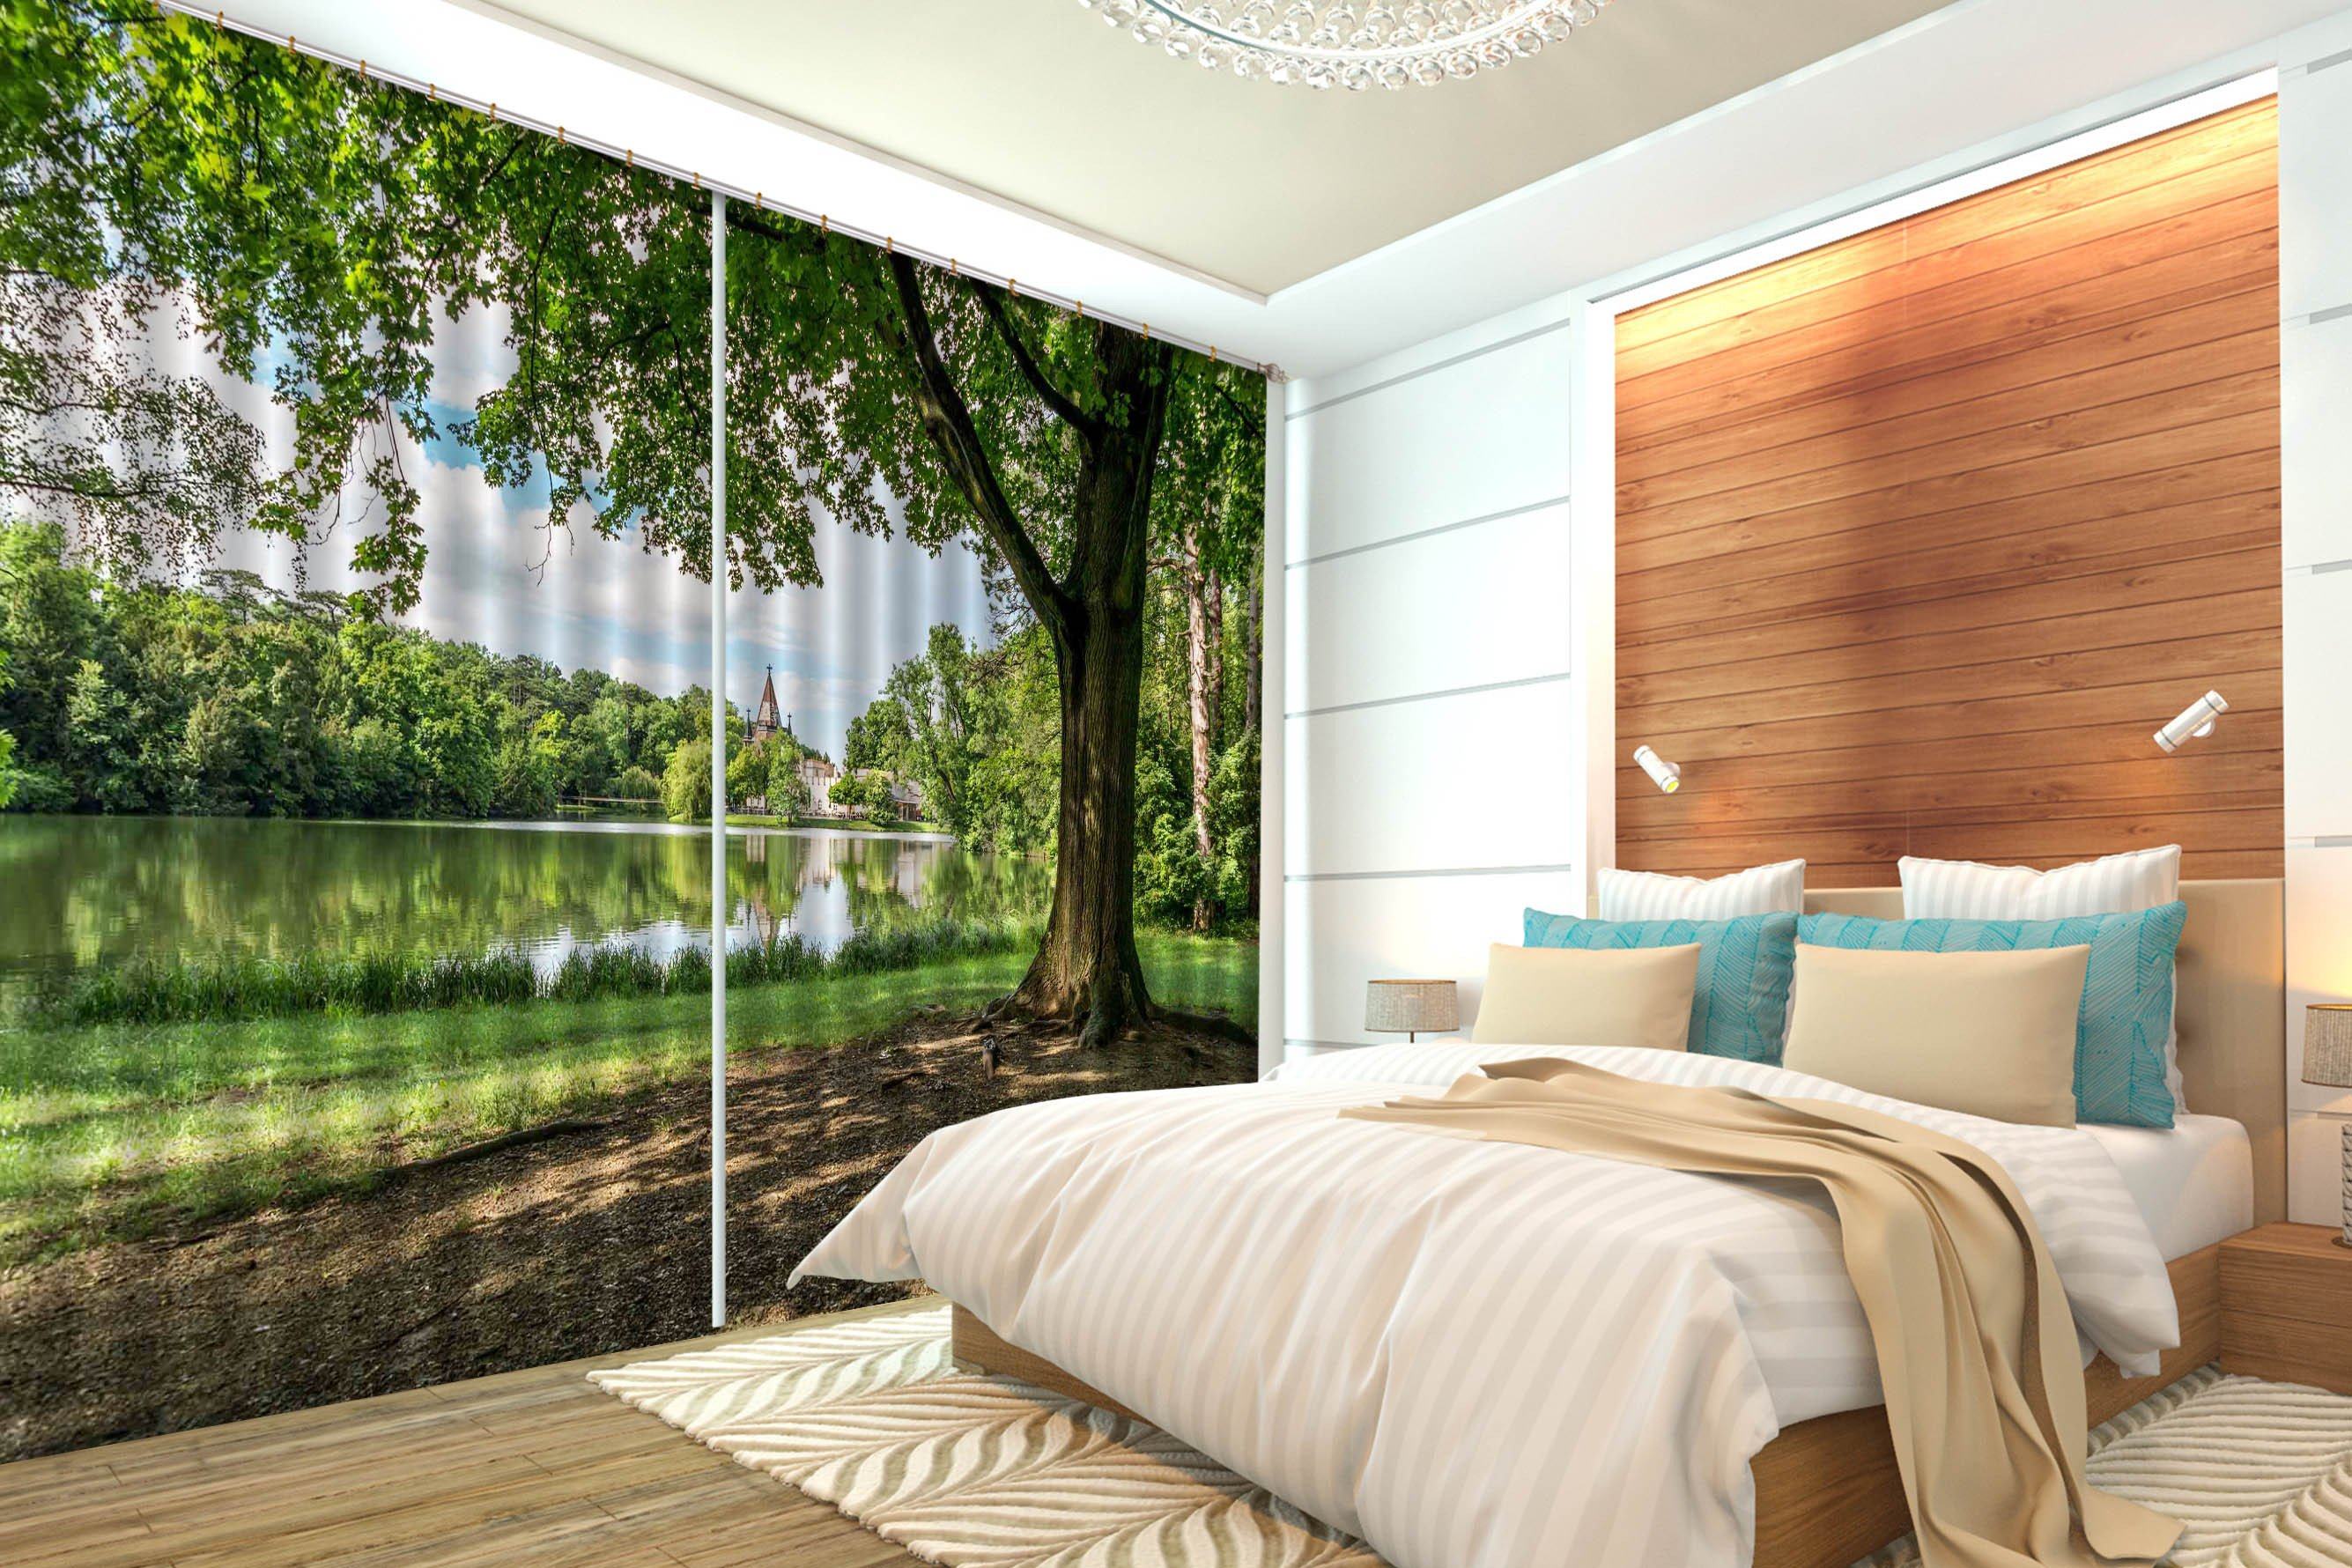 3D Lakeside Green Tree 524 Curtains Drapes Wallpaper AJ Wallpaper 